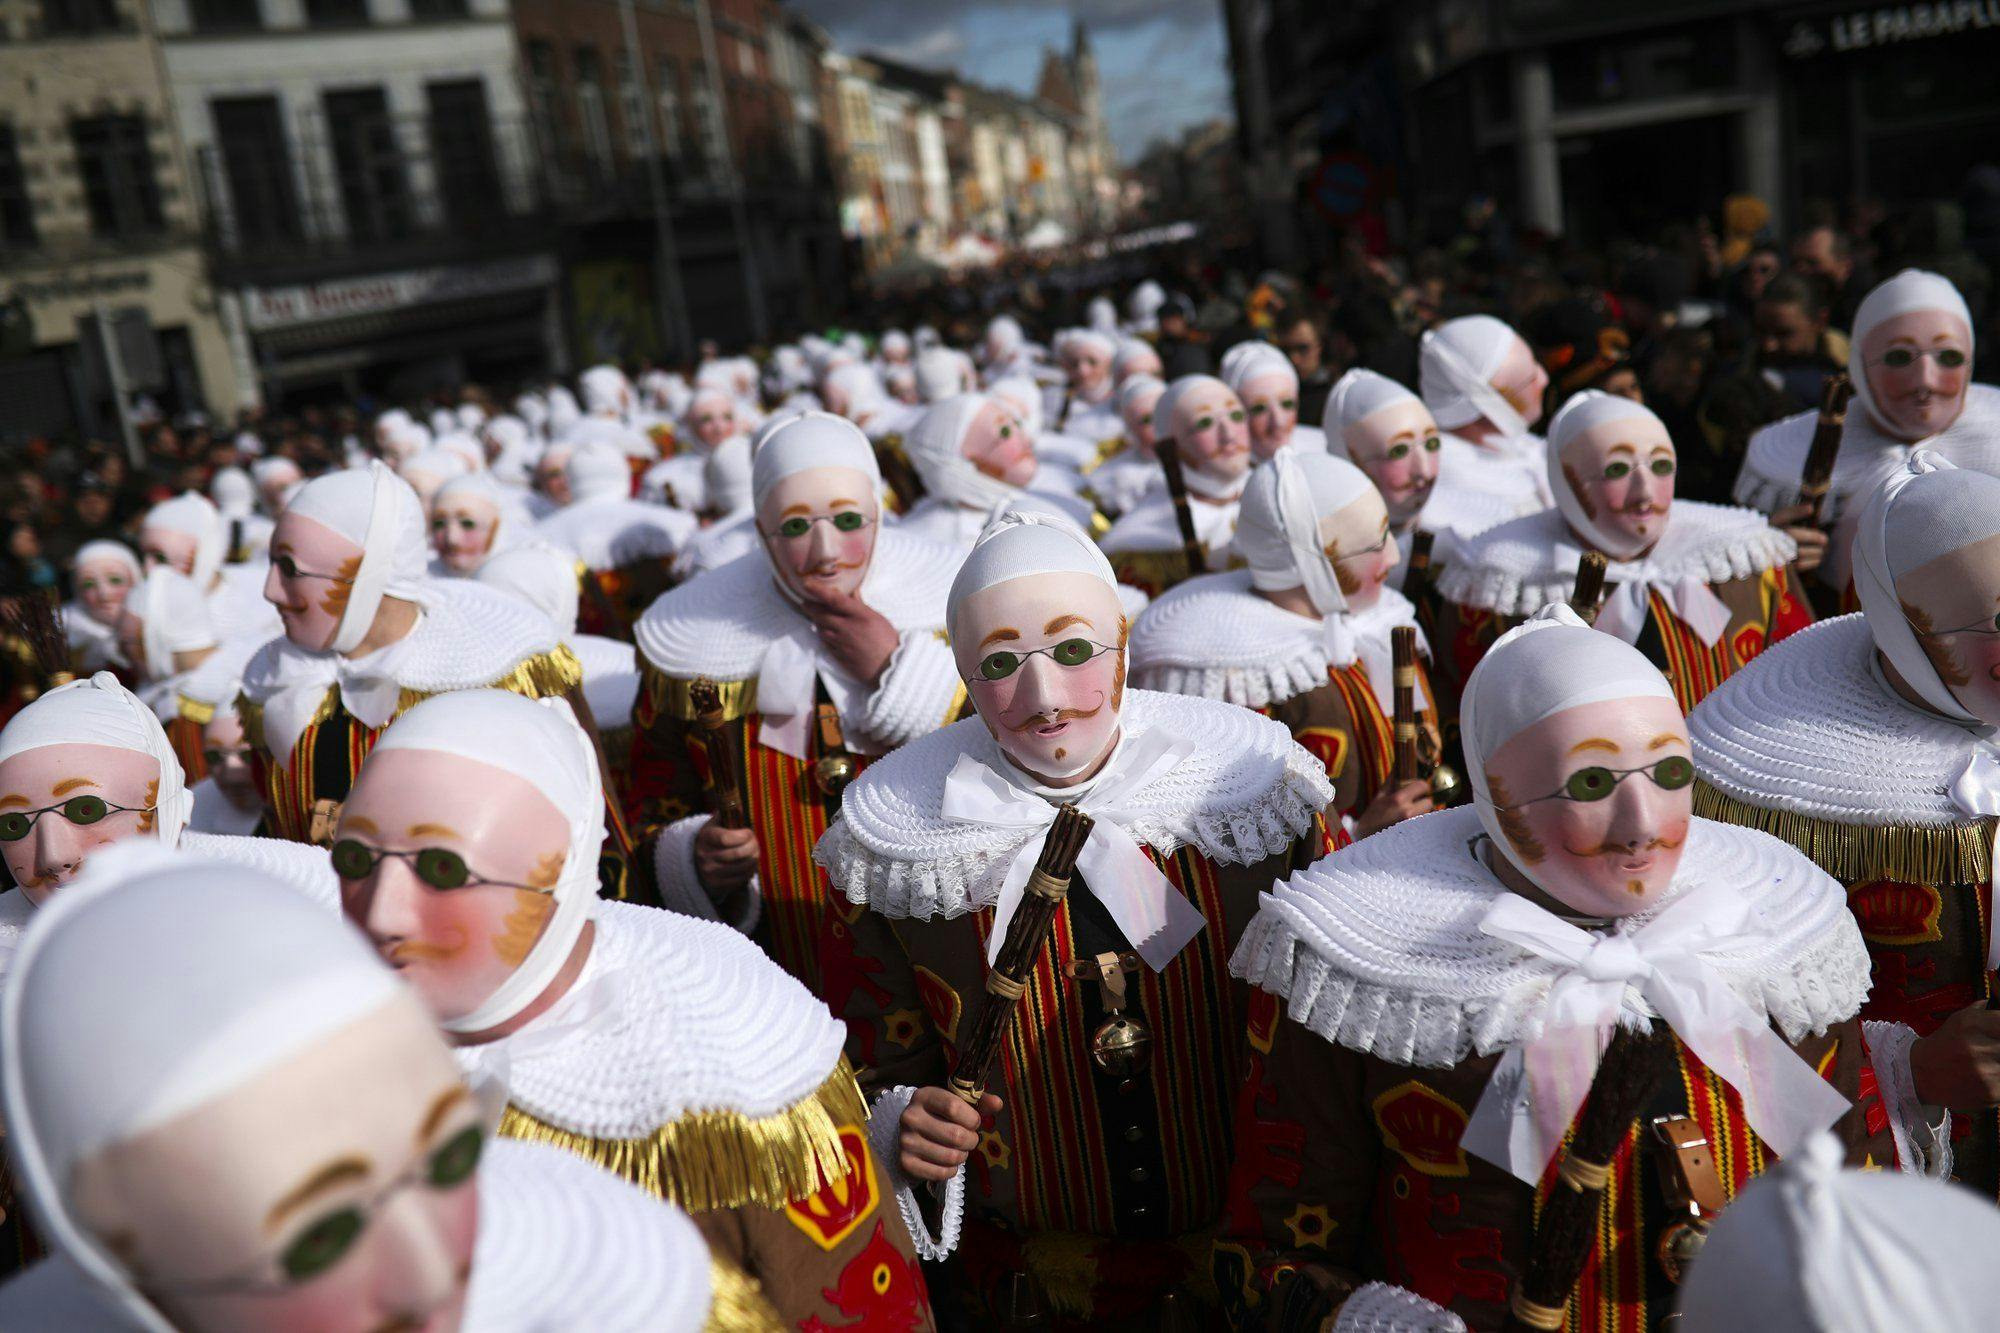 Binche Carnival in Belgium RatePunk